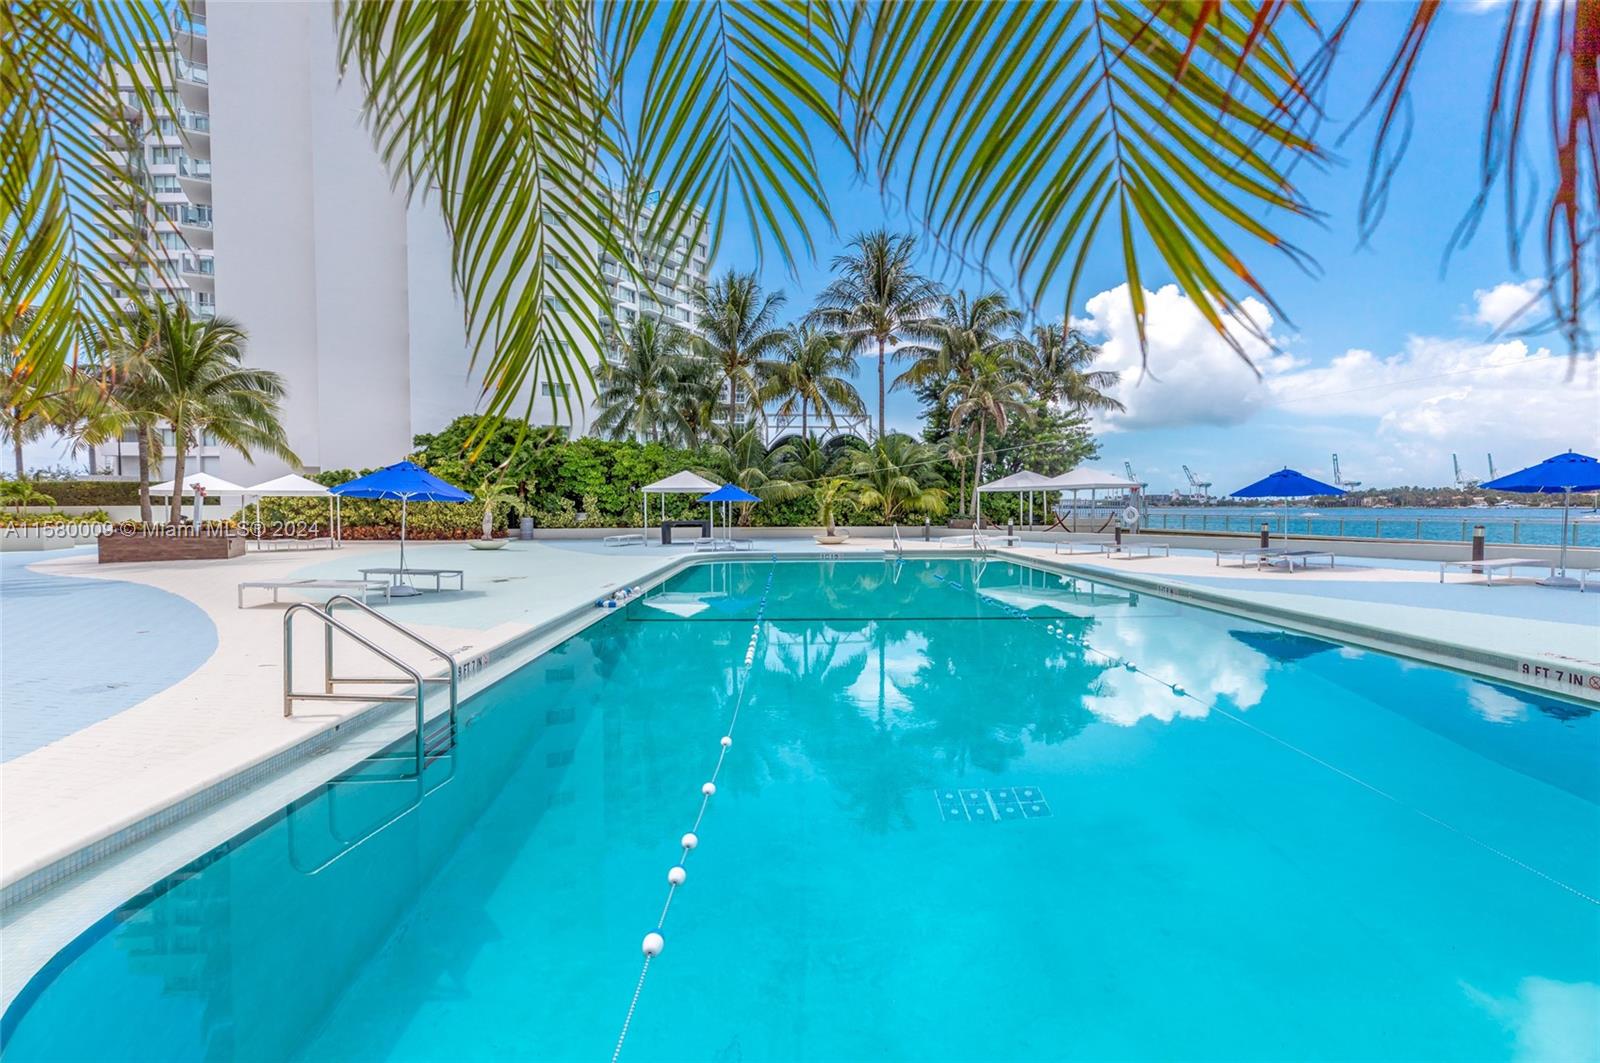 Rental Property at 1200 West Ave 512, Miami Beach, Miami-Dade County, Florida - Bathrooms: 1  - $2,300 MO.